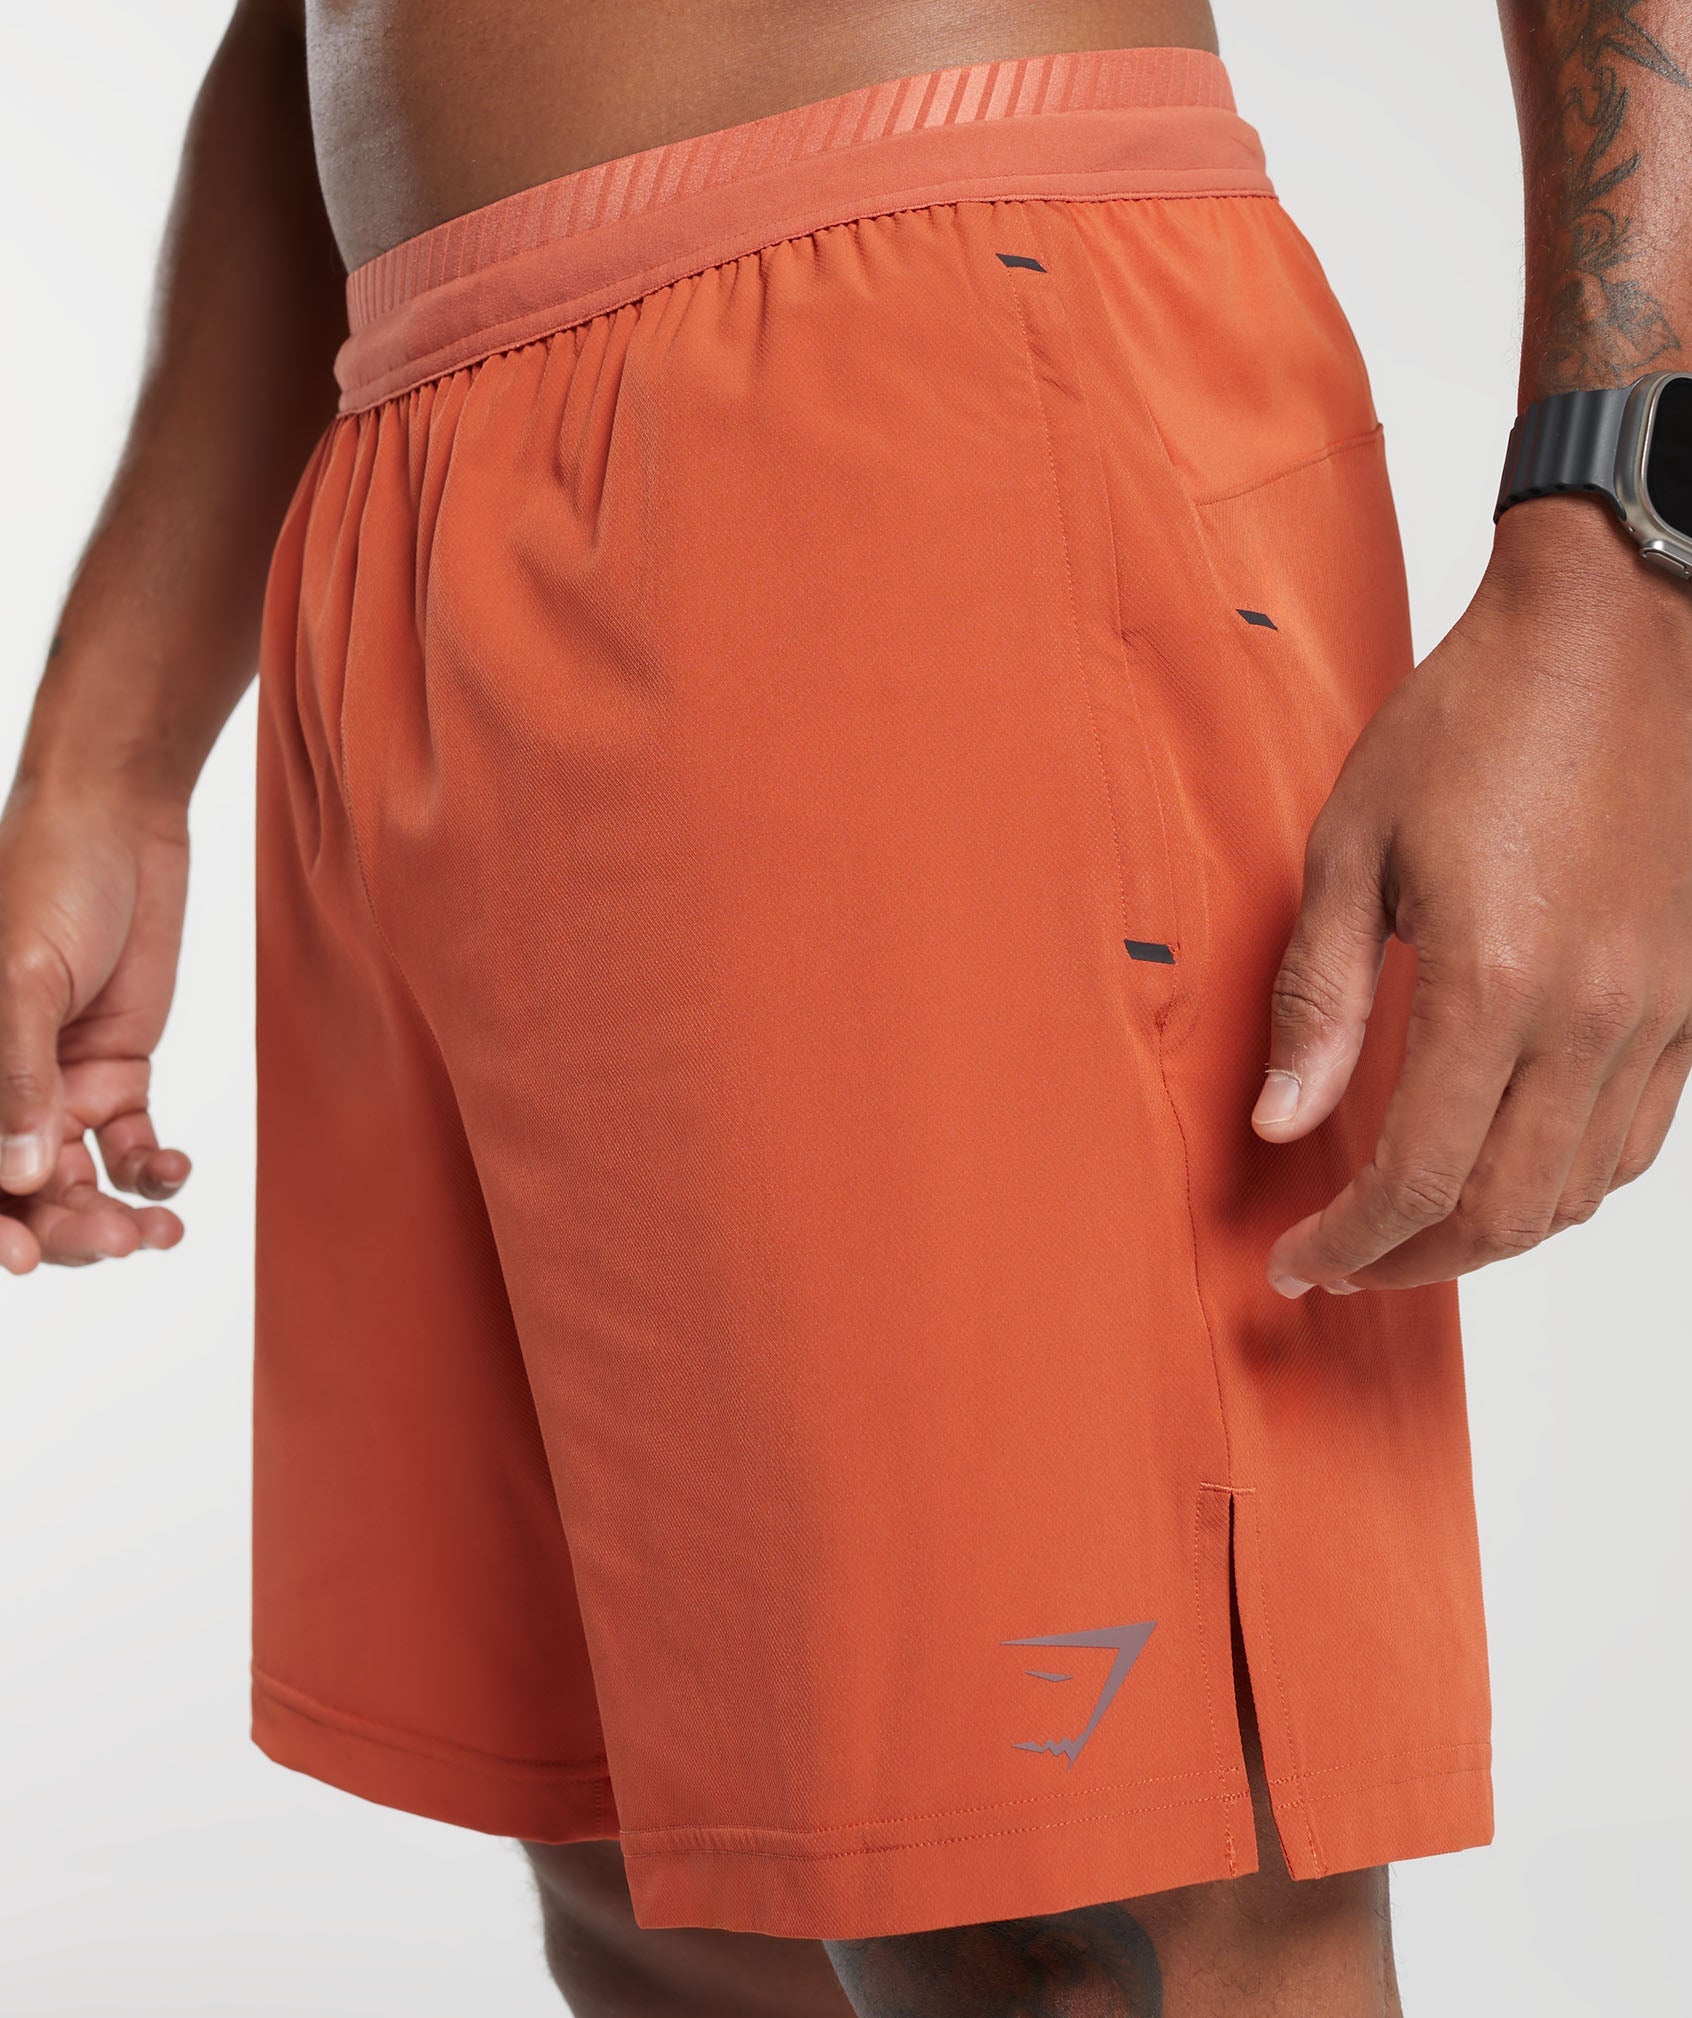 Apex 7" Hybrid Shorts in Rust Orange - view 6